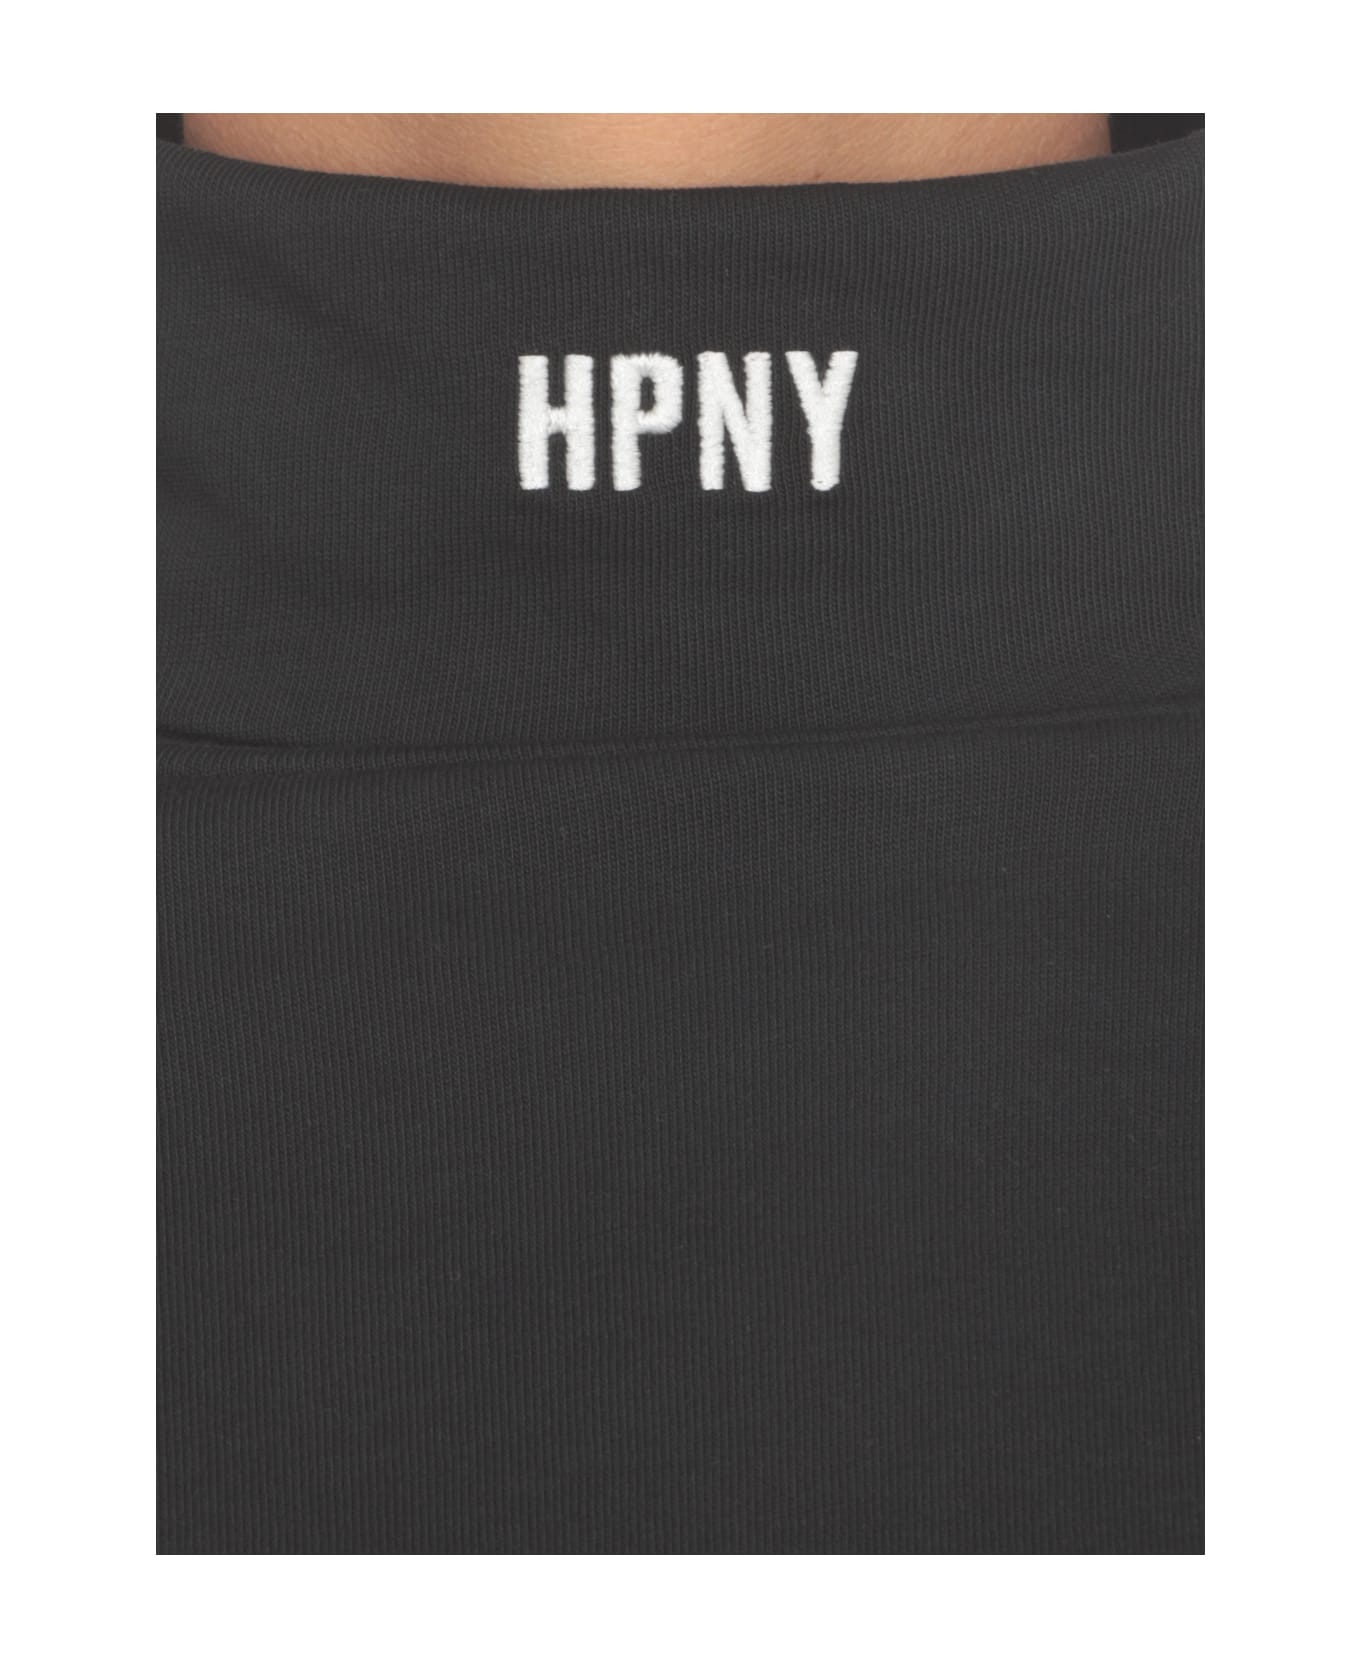 HERON PRESTON Sweater With Logo Hpny - Black Tシャツ